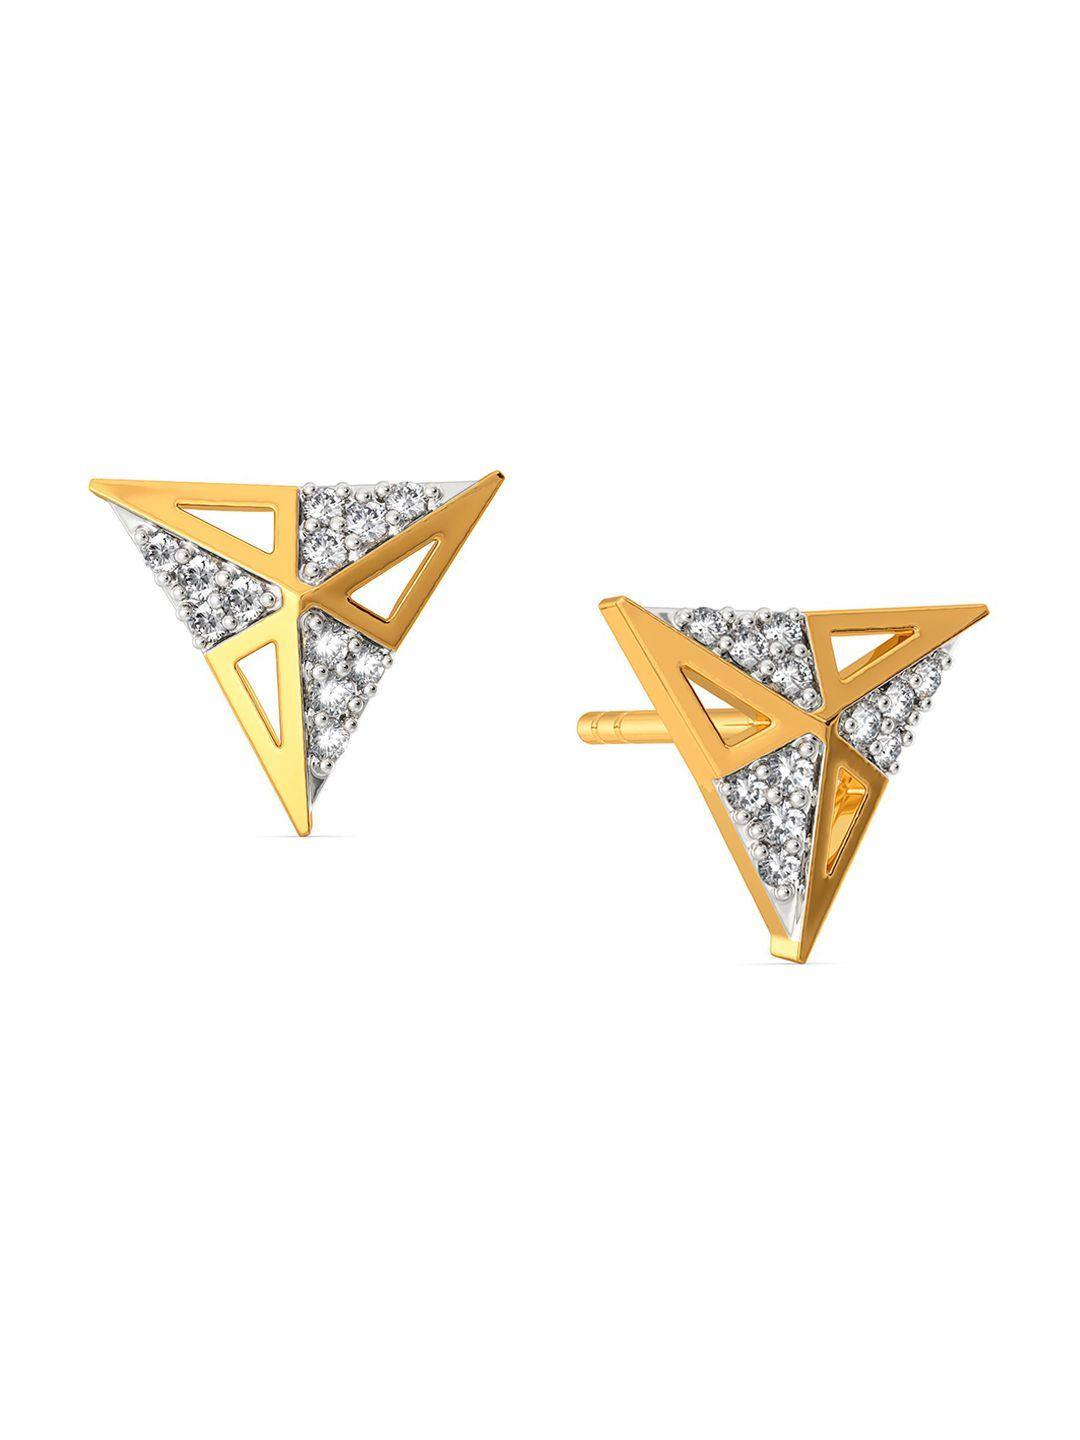 melorra the power angle 18kt gold diamond stud earrings-1.86gm